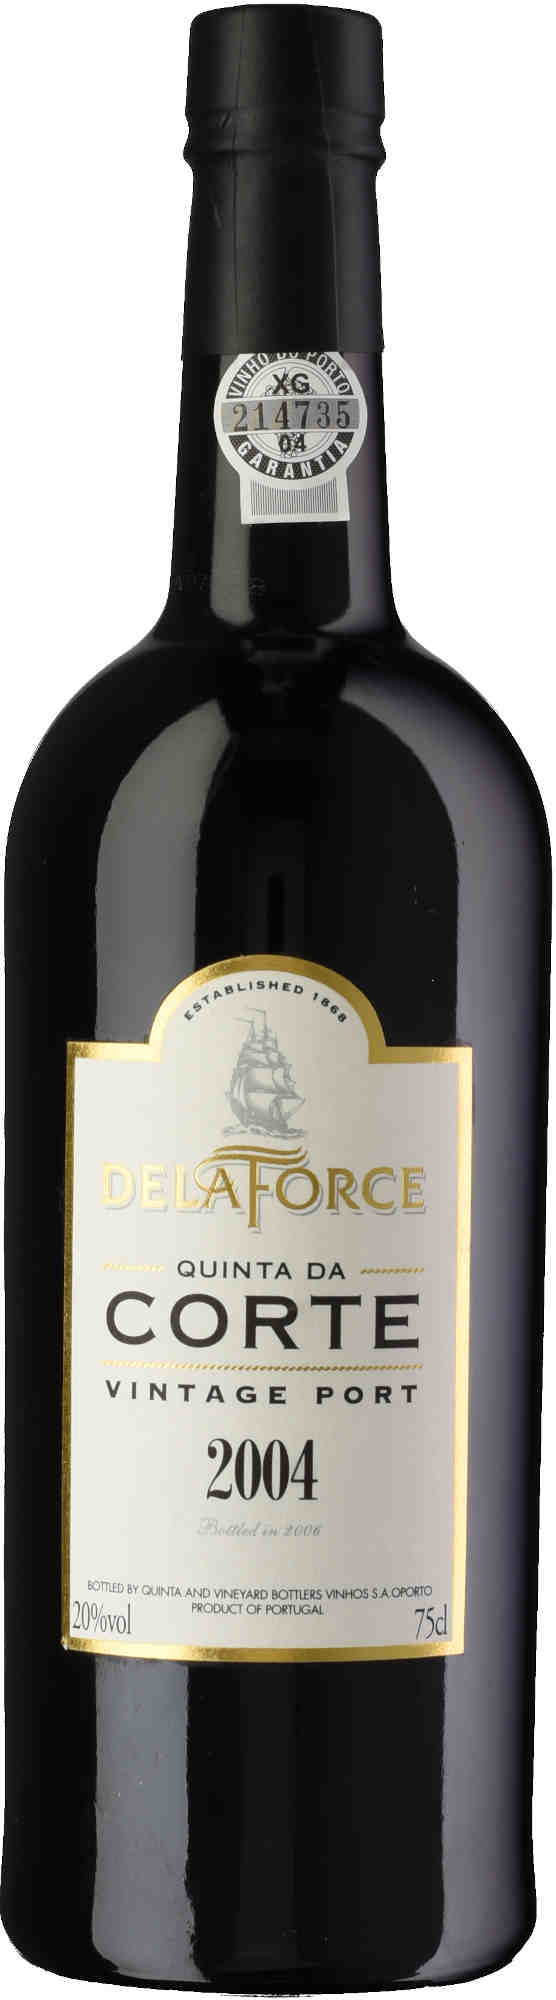 Delaforce-Corte-Vintage-Port-2004